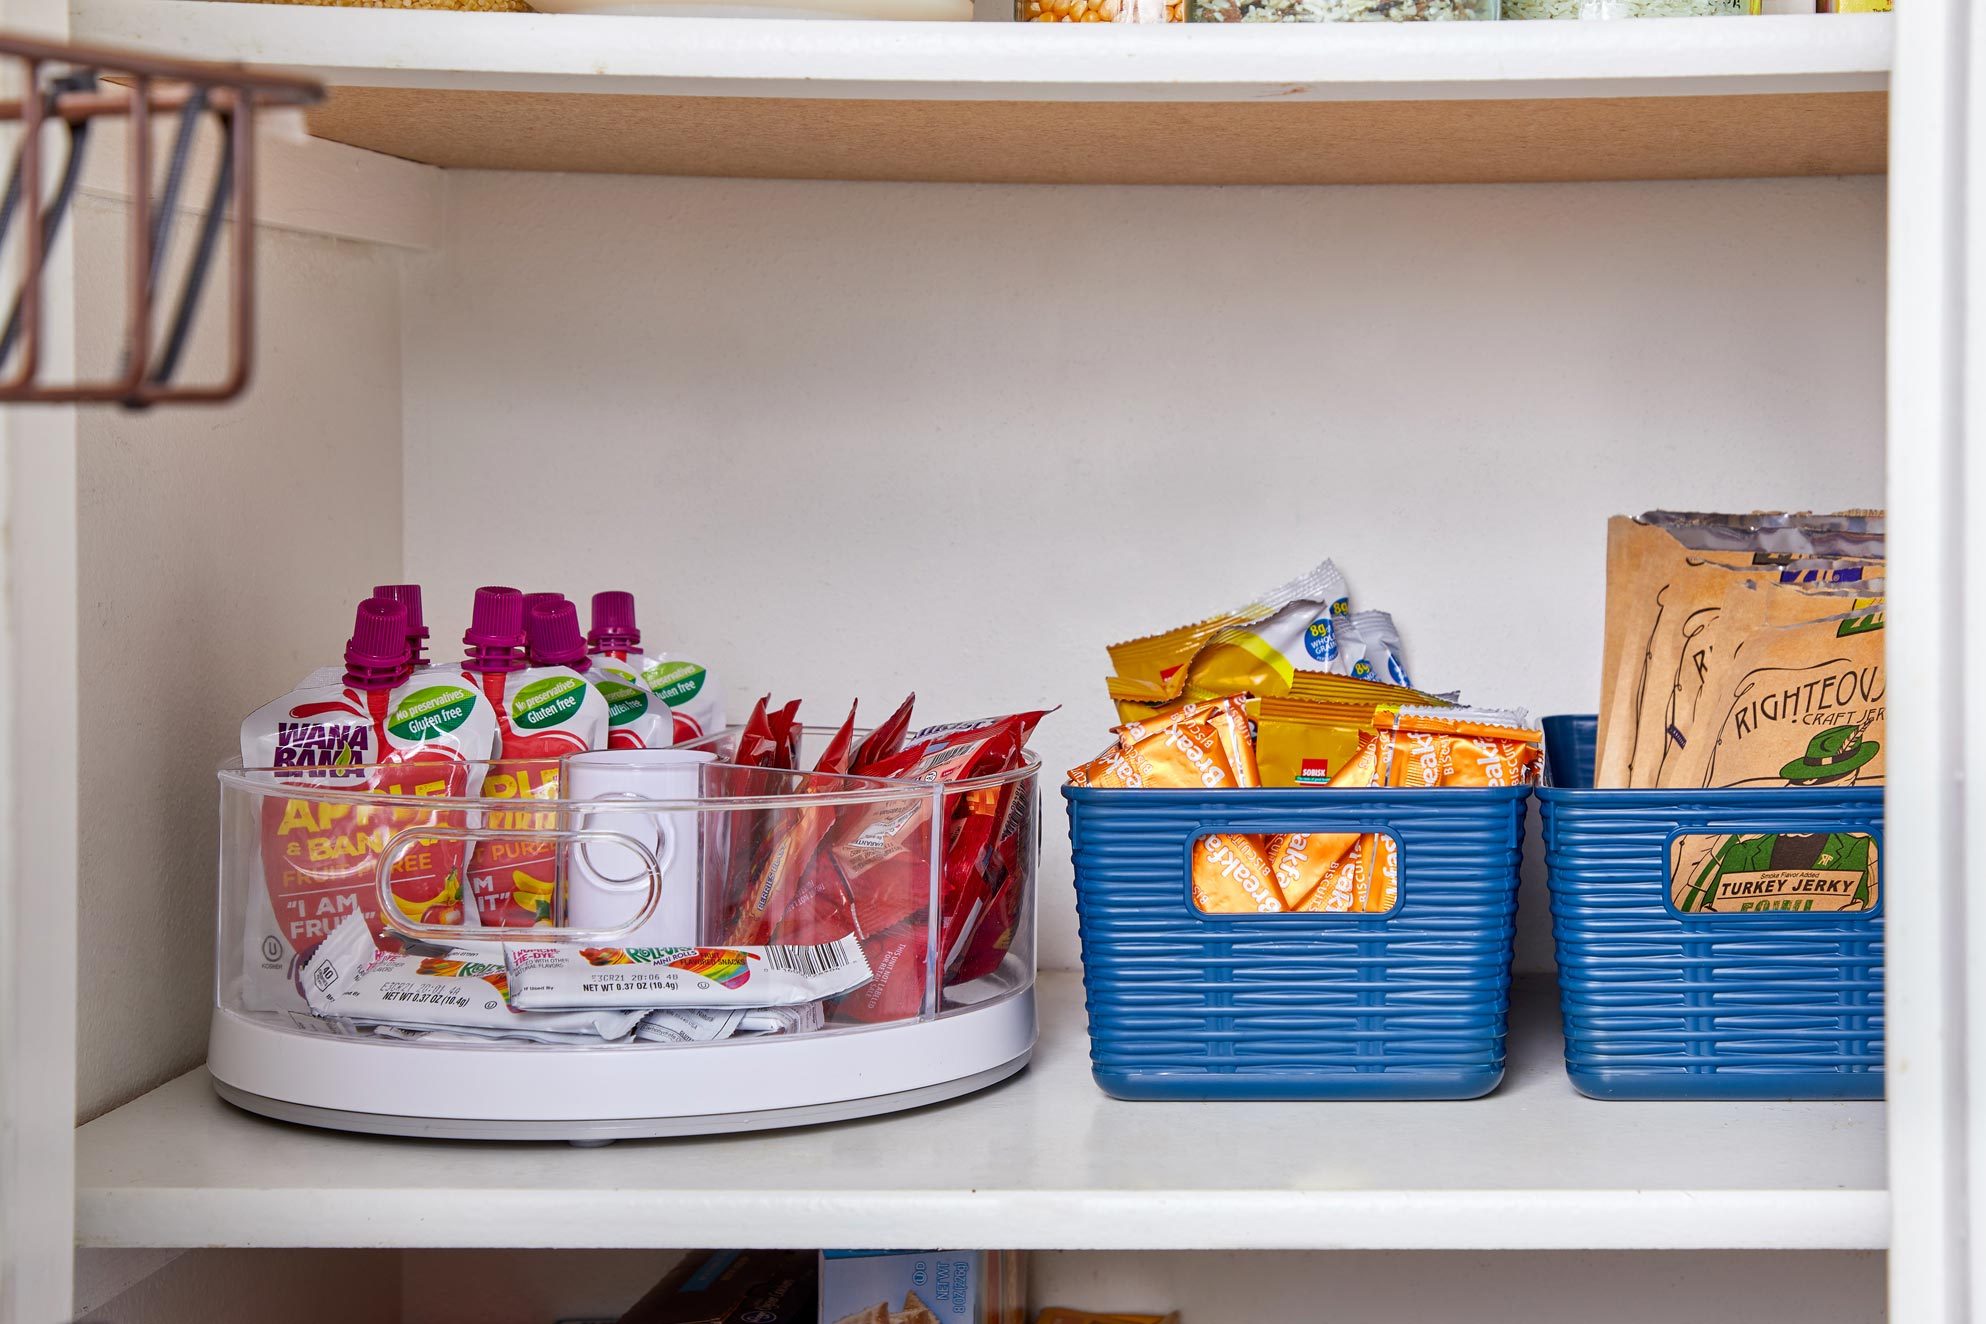 The 10 Best Ways to Organize Food Storage Containers  Tupperware organizing,  Food storage containers organization, Food storage containers